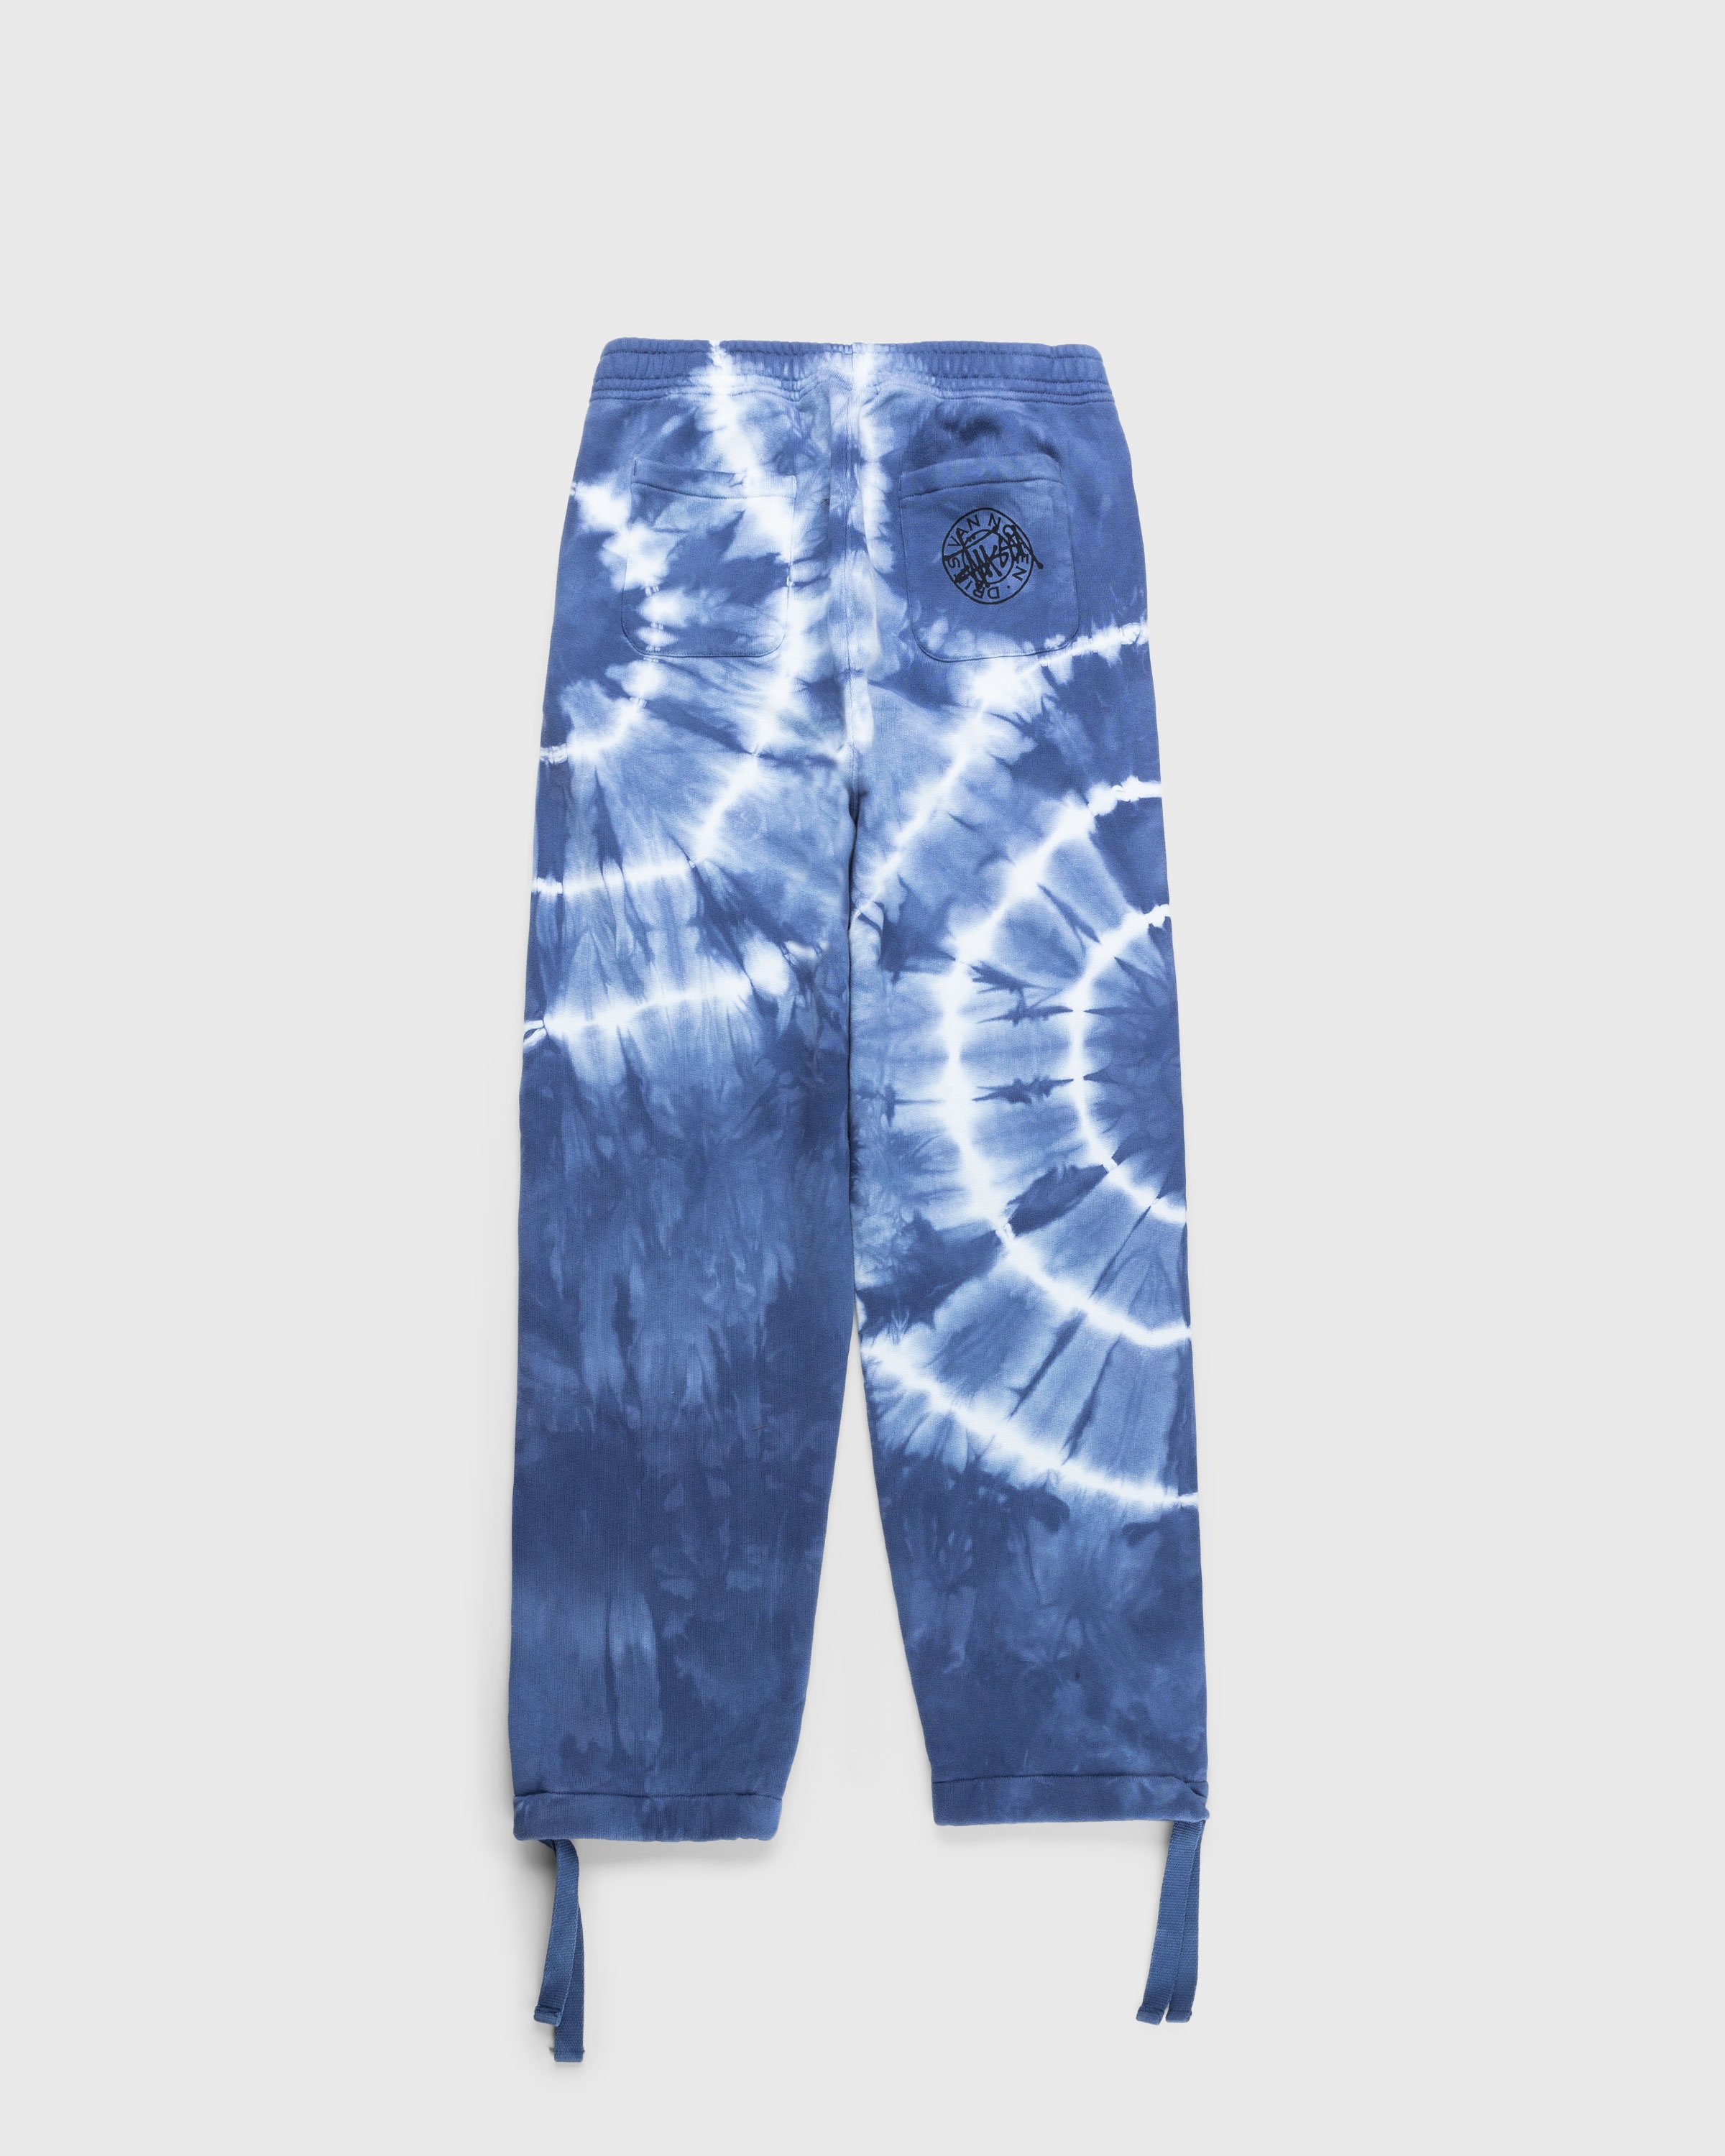 Stüssy x Dries van Noten - Tie Dye Pant - Clothing - Blue - Image 2